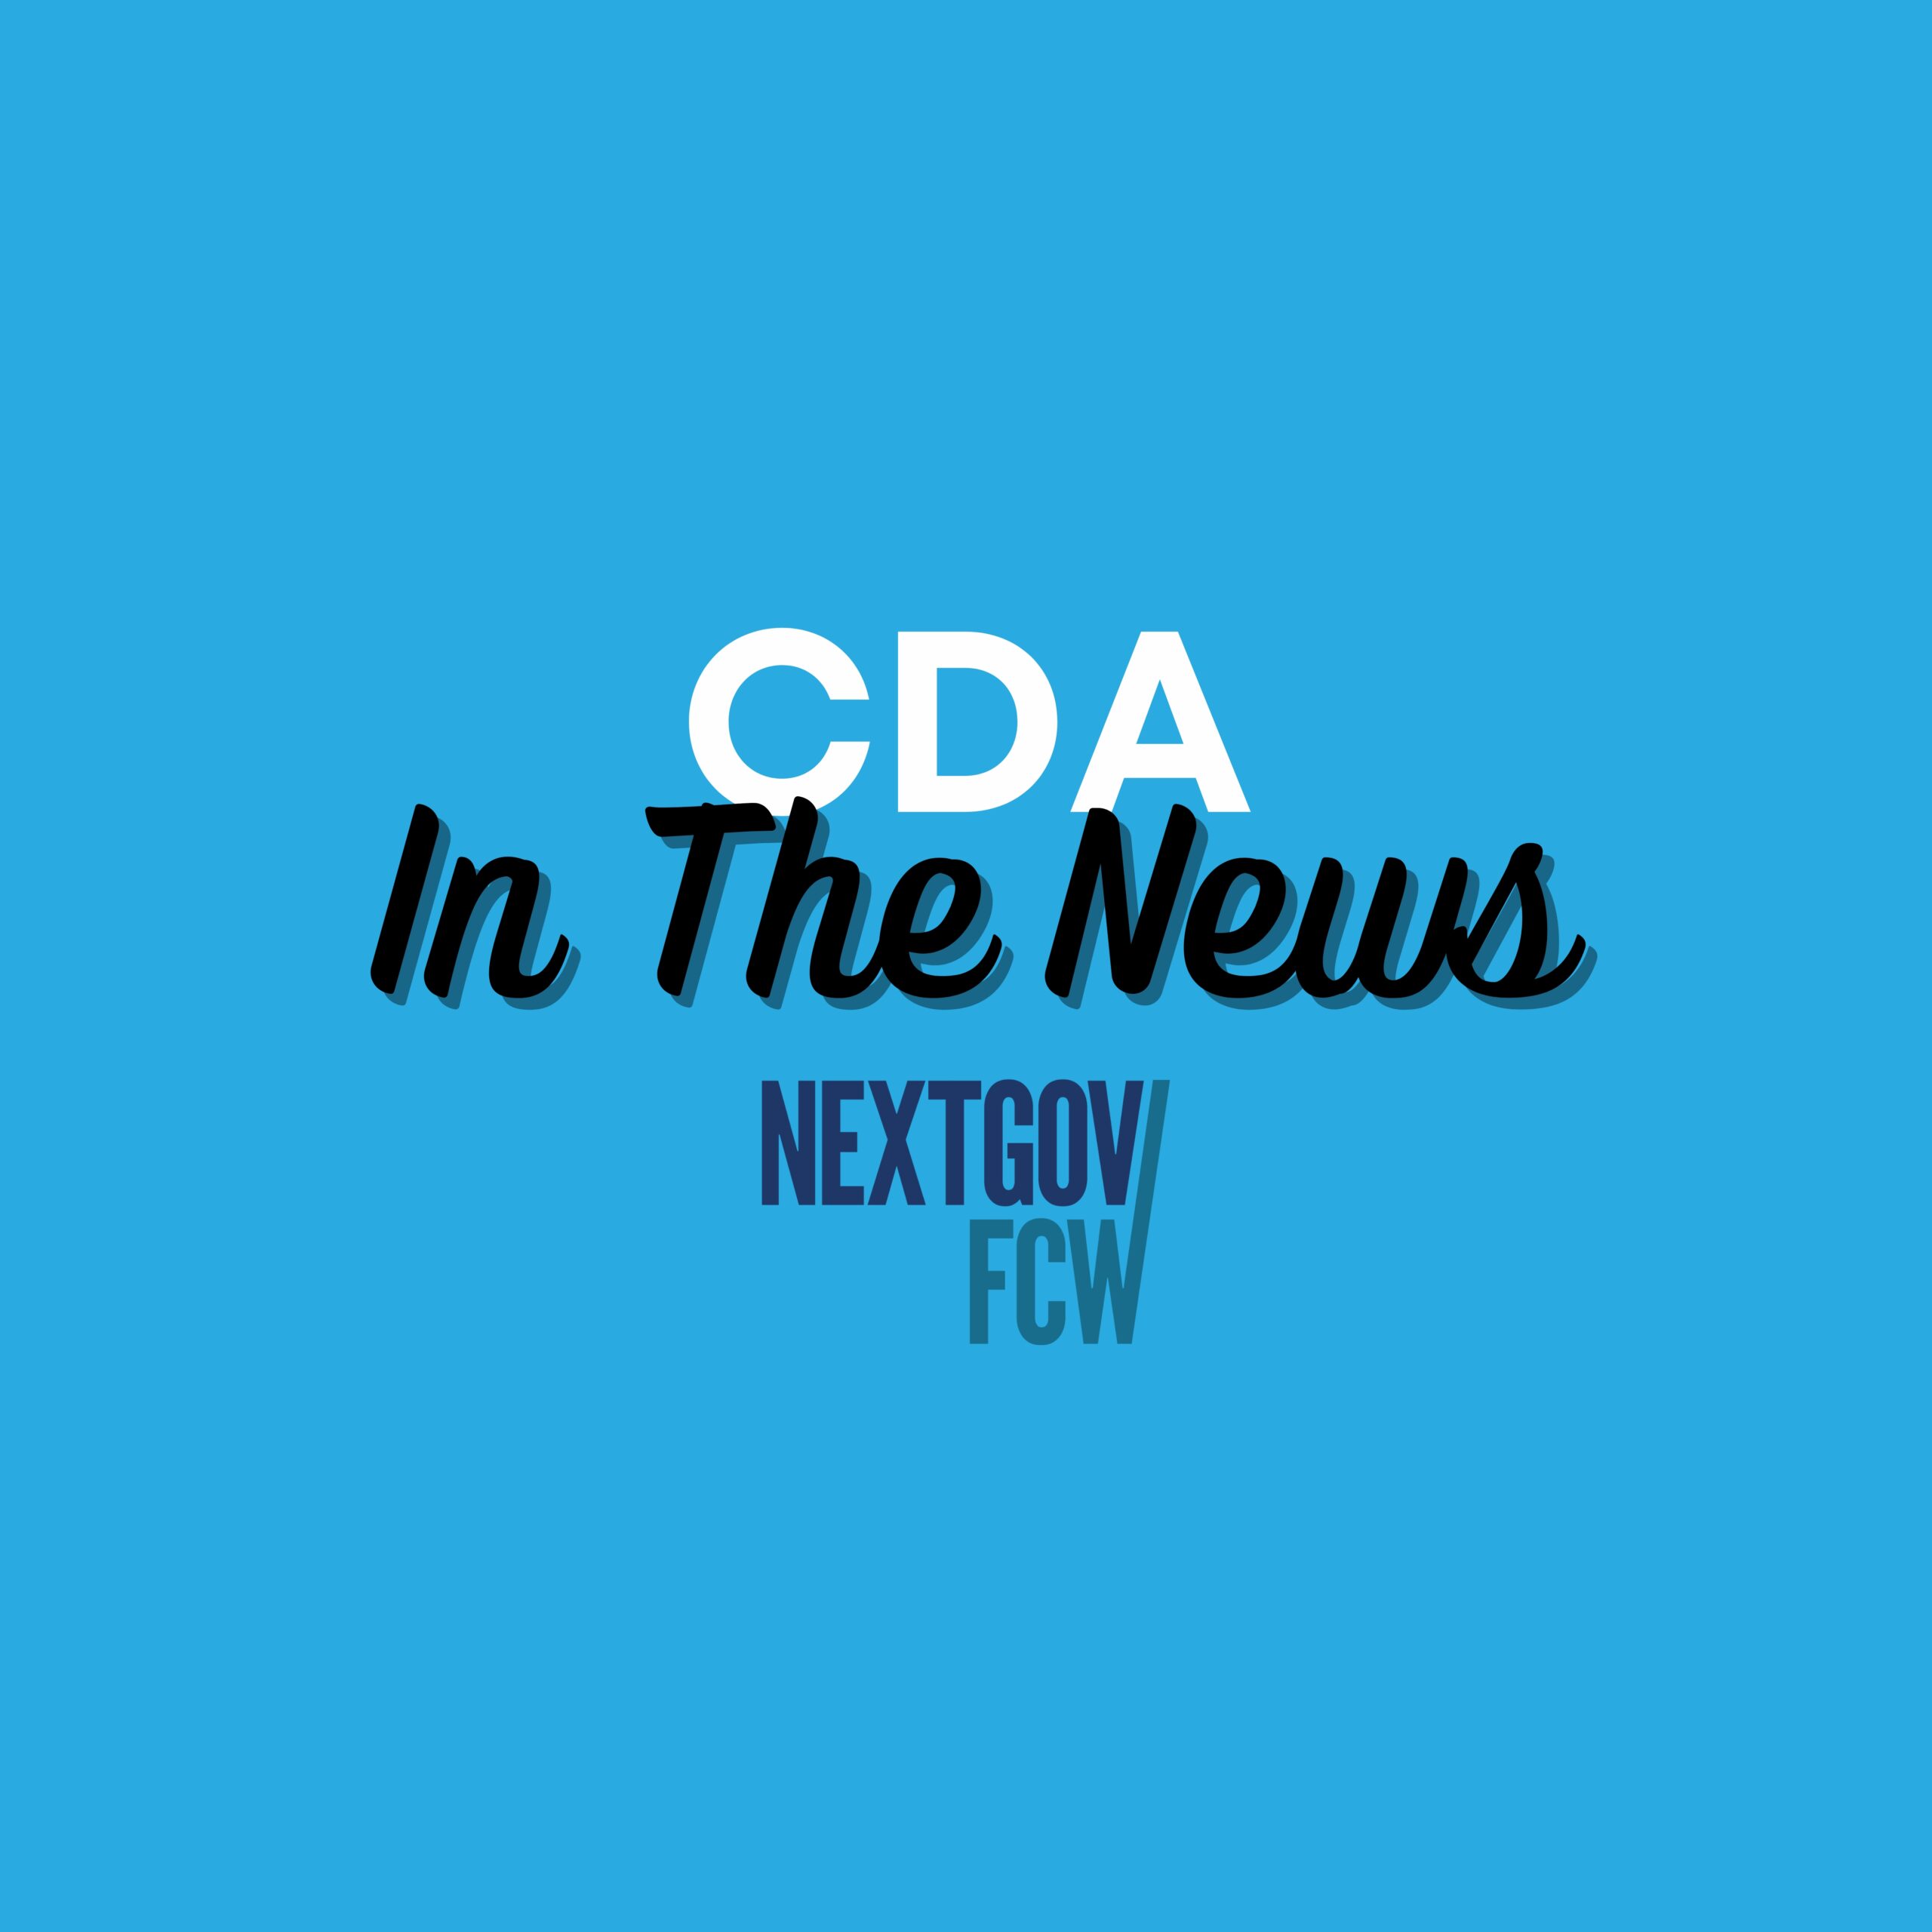 CDA Lisa Ellman In The News NextGov